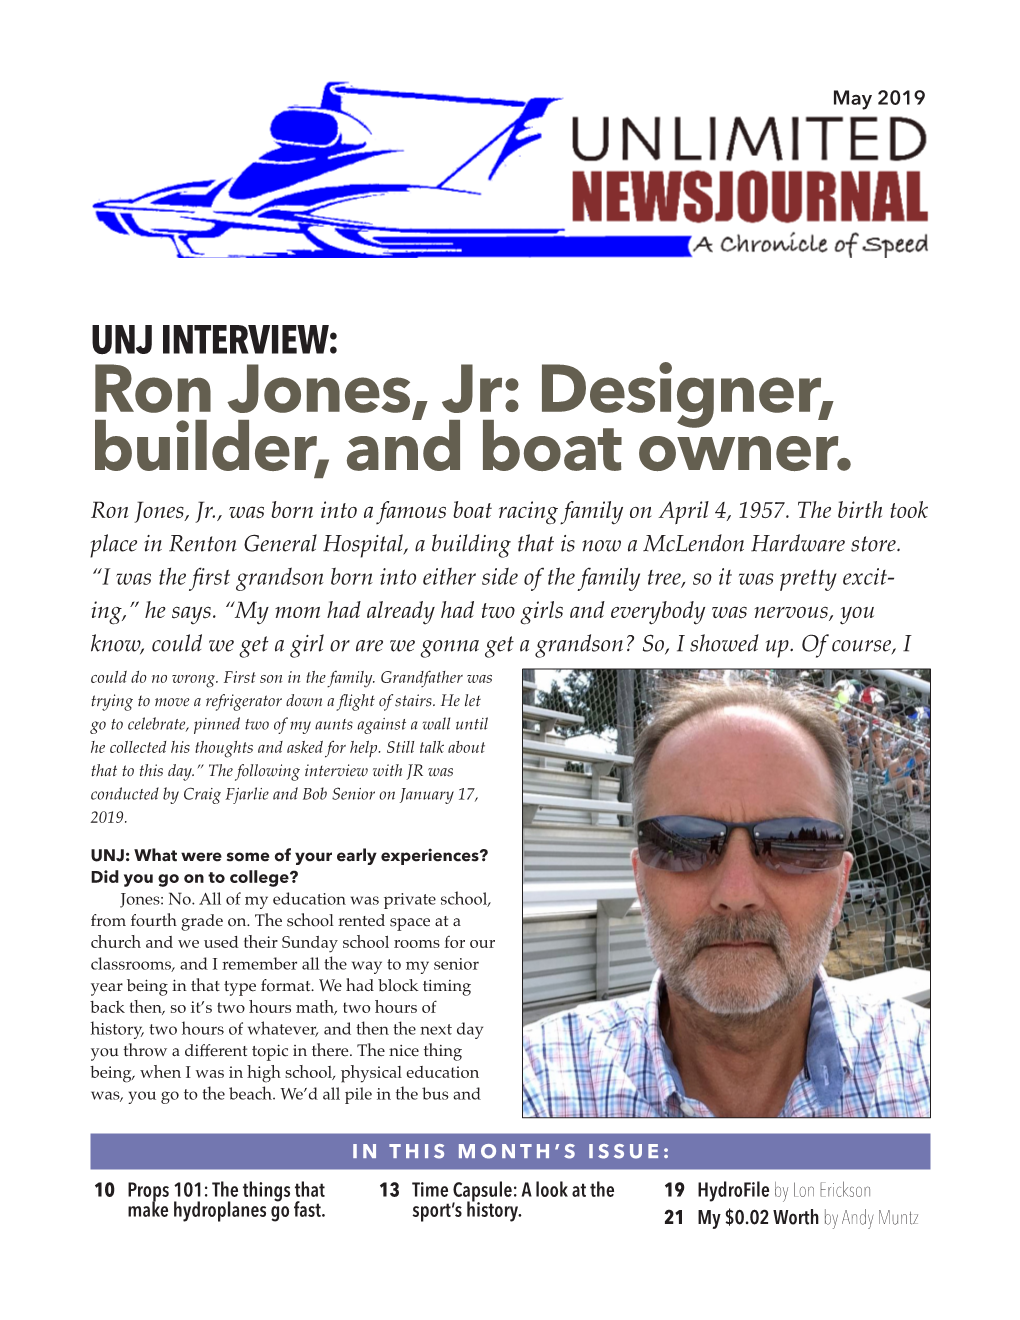 Ron Jones, Jr: Designer, Builder, and Boat Owner. Ron Jones, Jr., Was Born Into a Famous Boat Racing Family on April 4, 1957